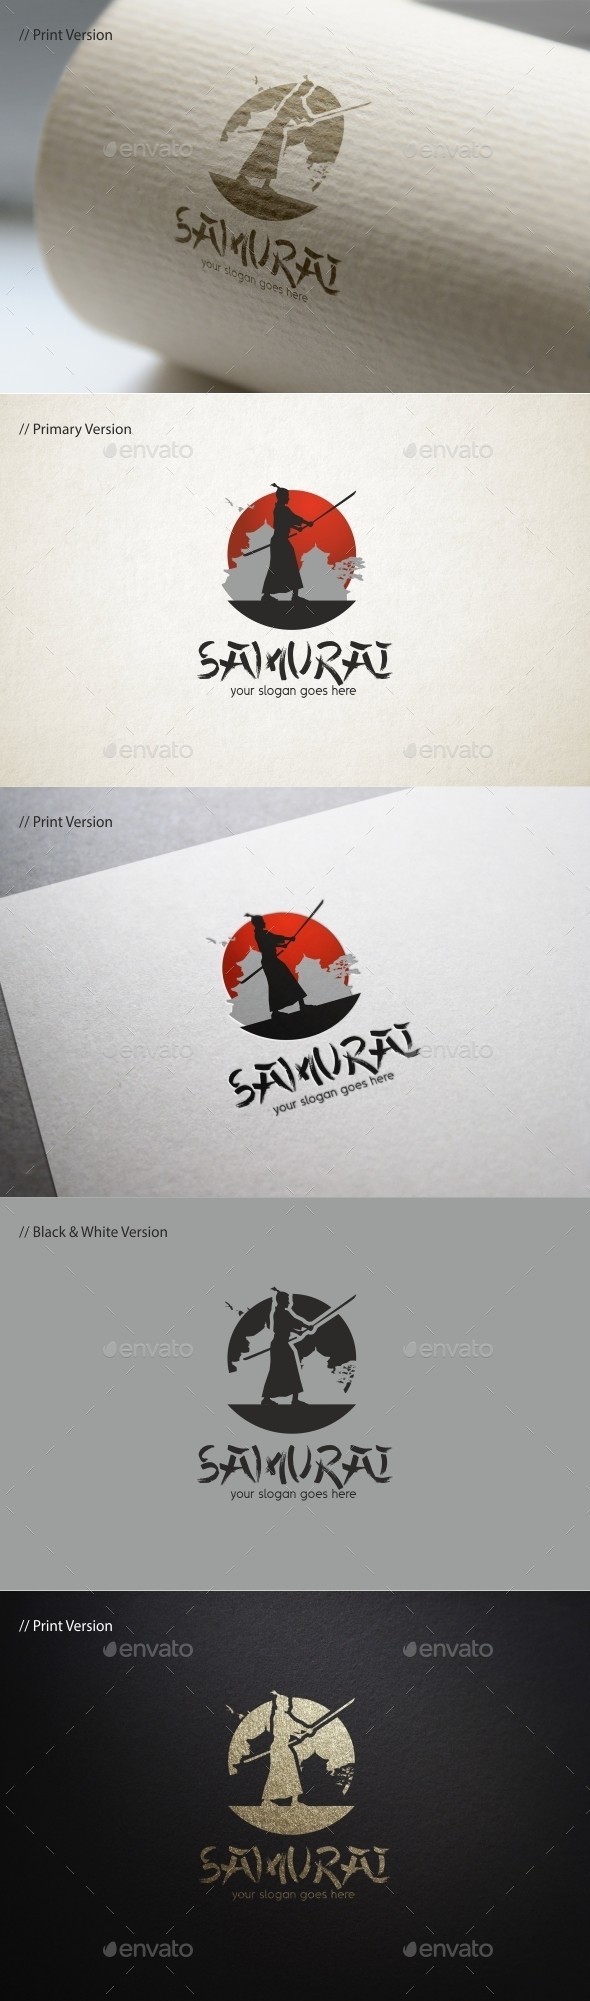 Samurai 20logo 20template 20590